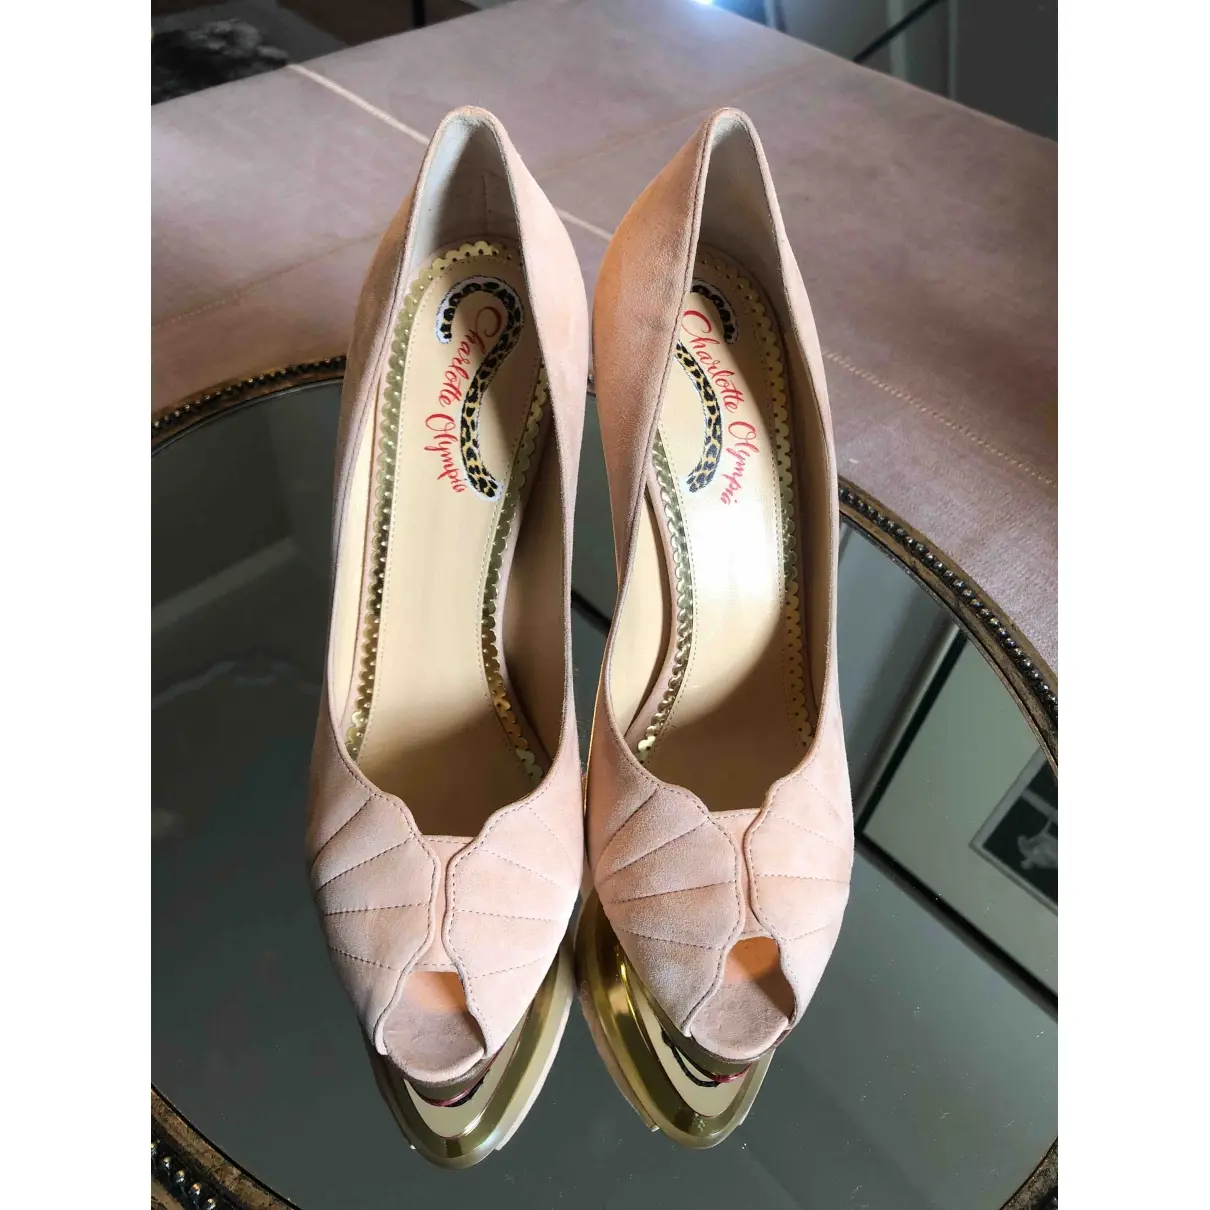 Buy Charlotte Olympia Dolly heels online